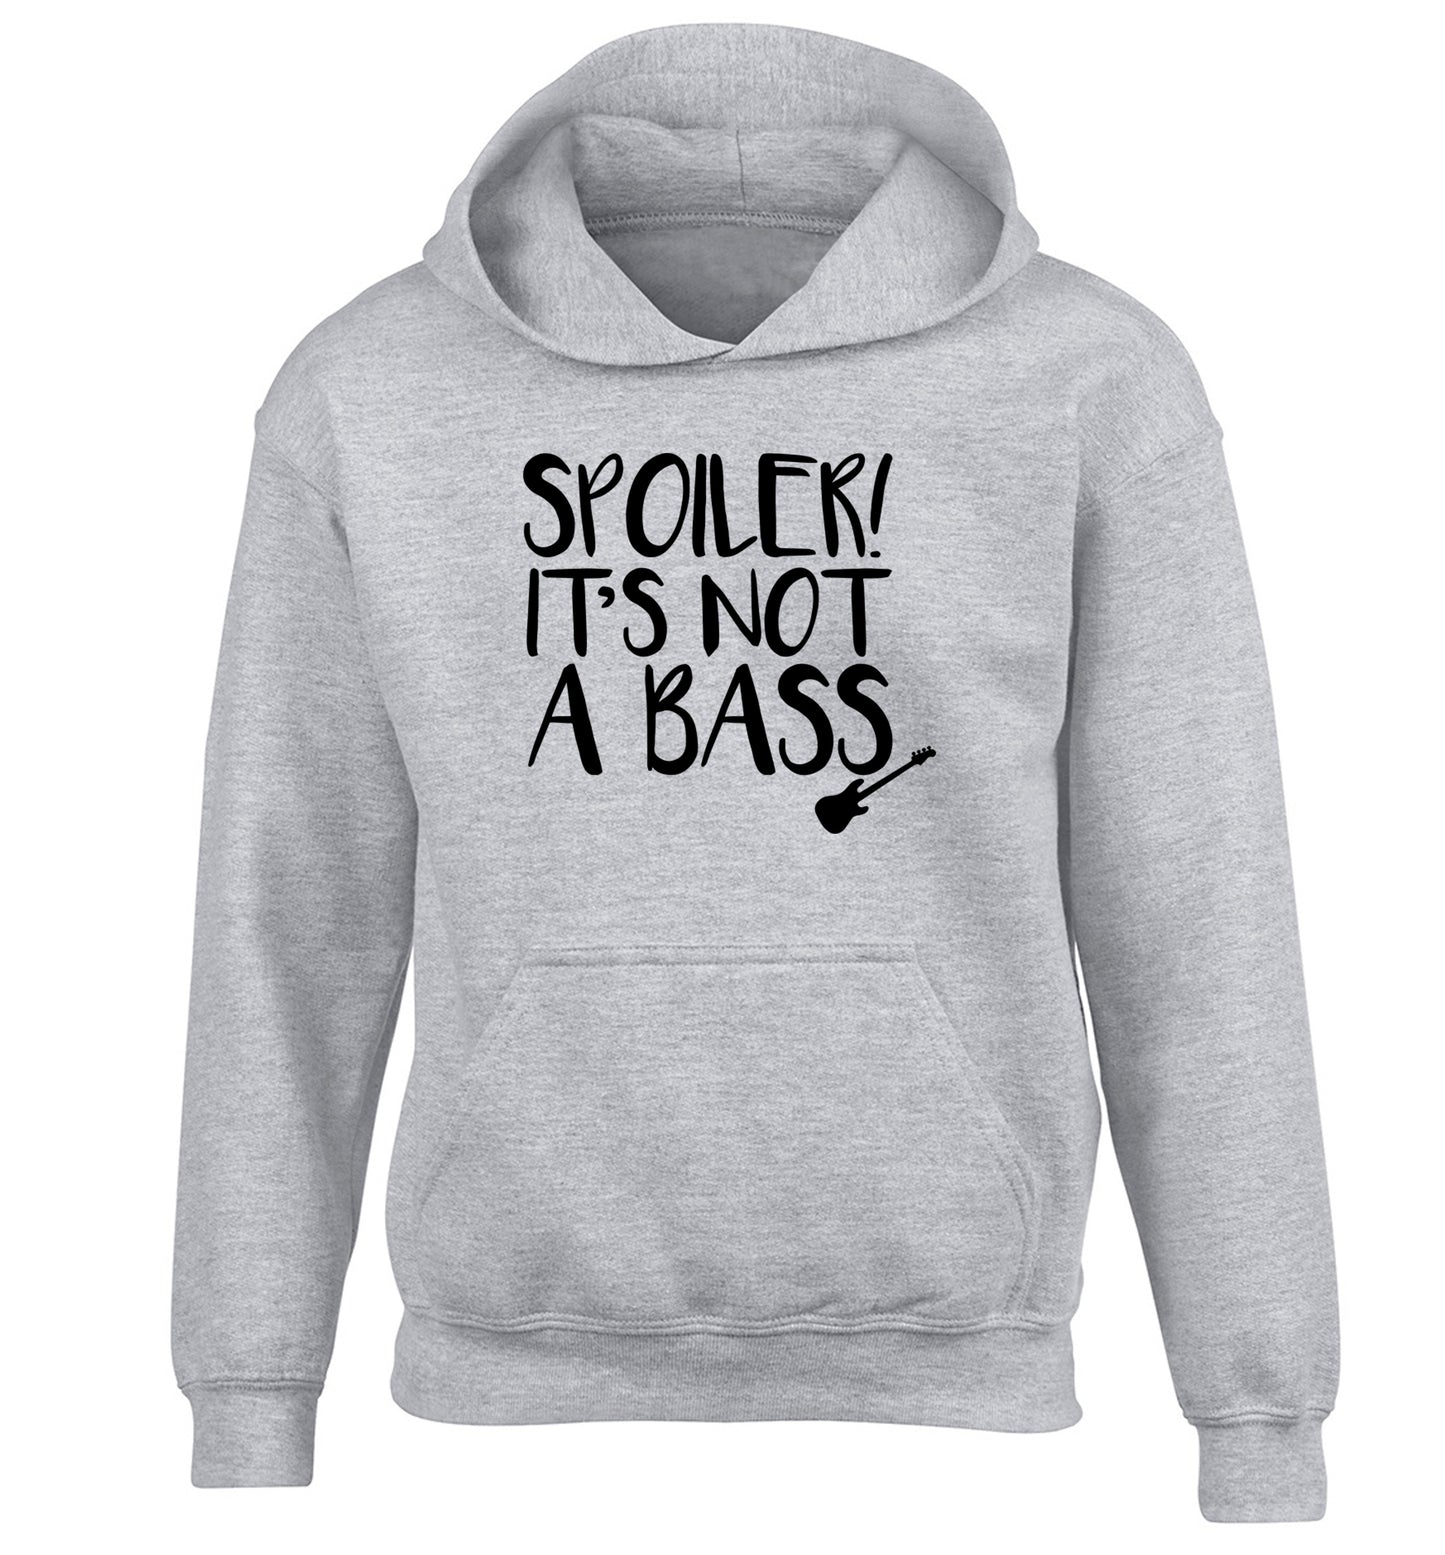 Spoiler it's not a bass children's grey hoodie 12-13 Years